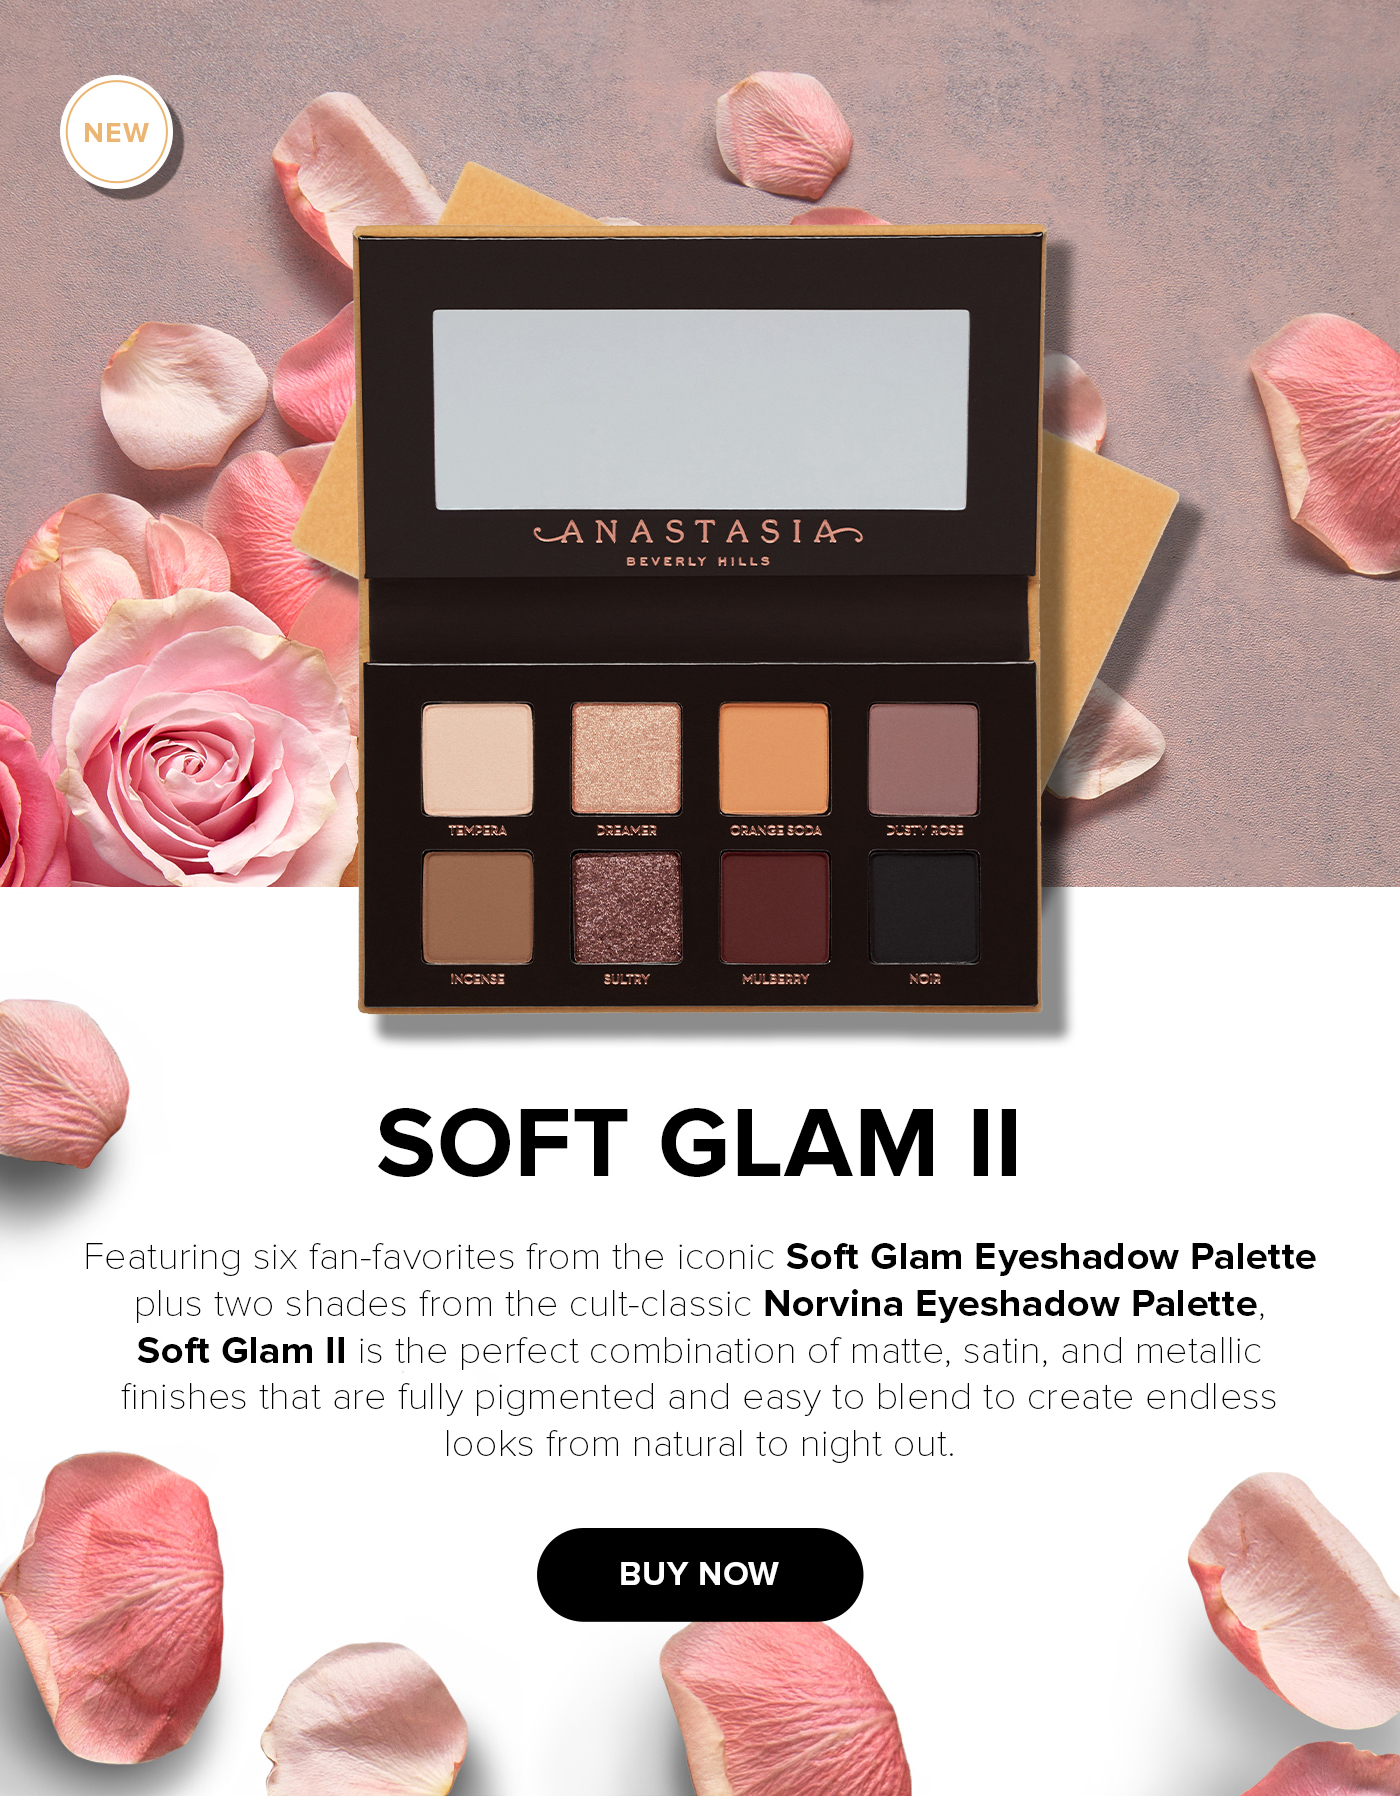 Soft Glam II - Shop Now